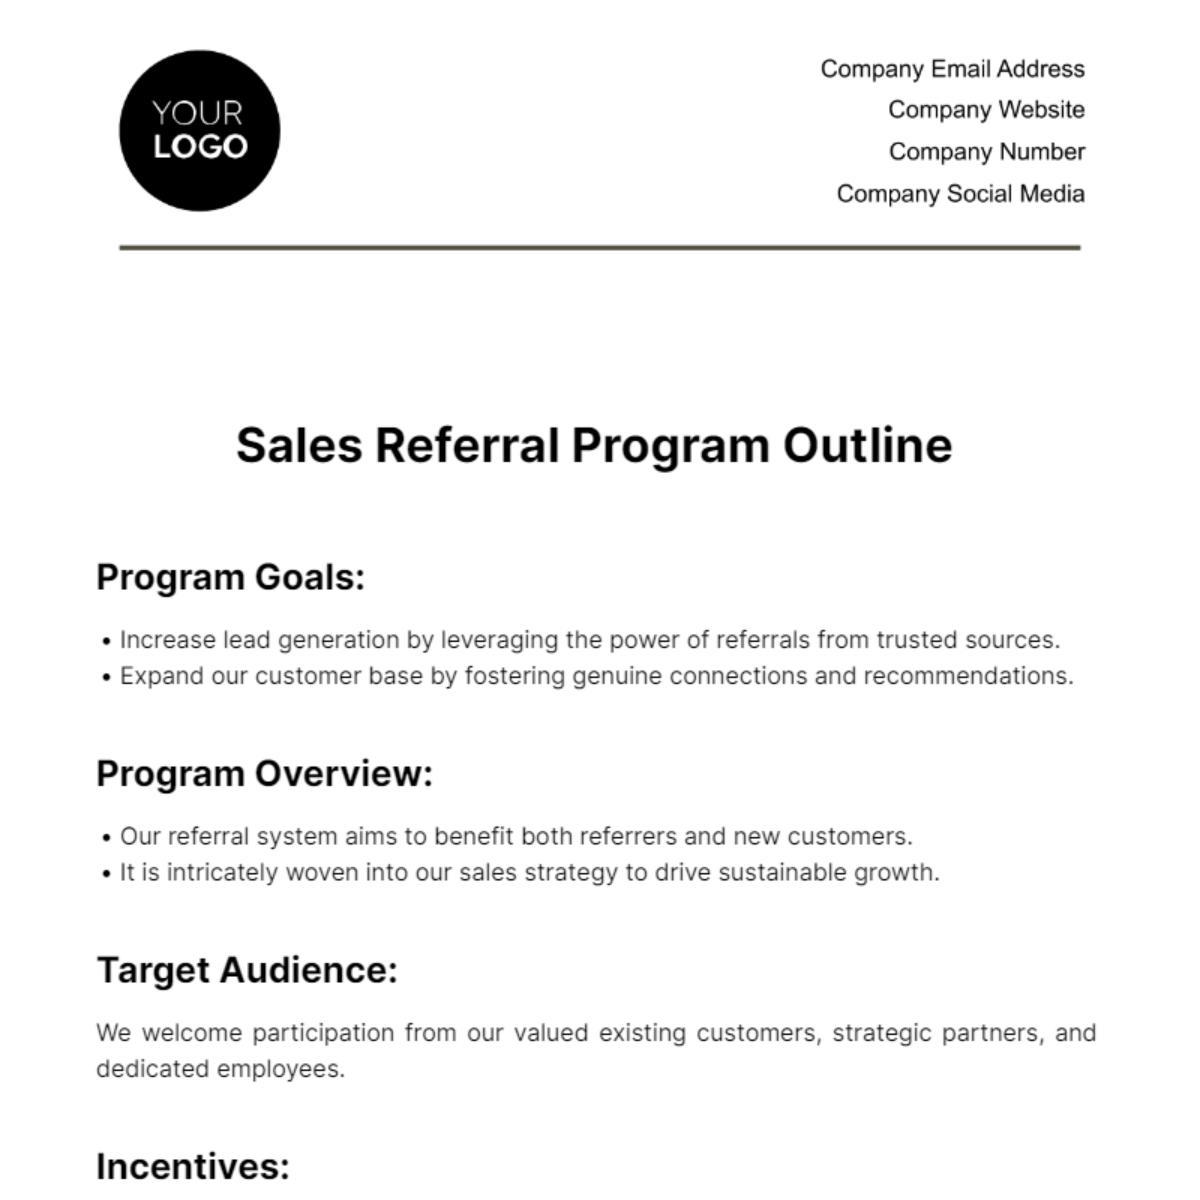 Sales Referral Program Outline Template